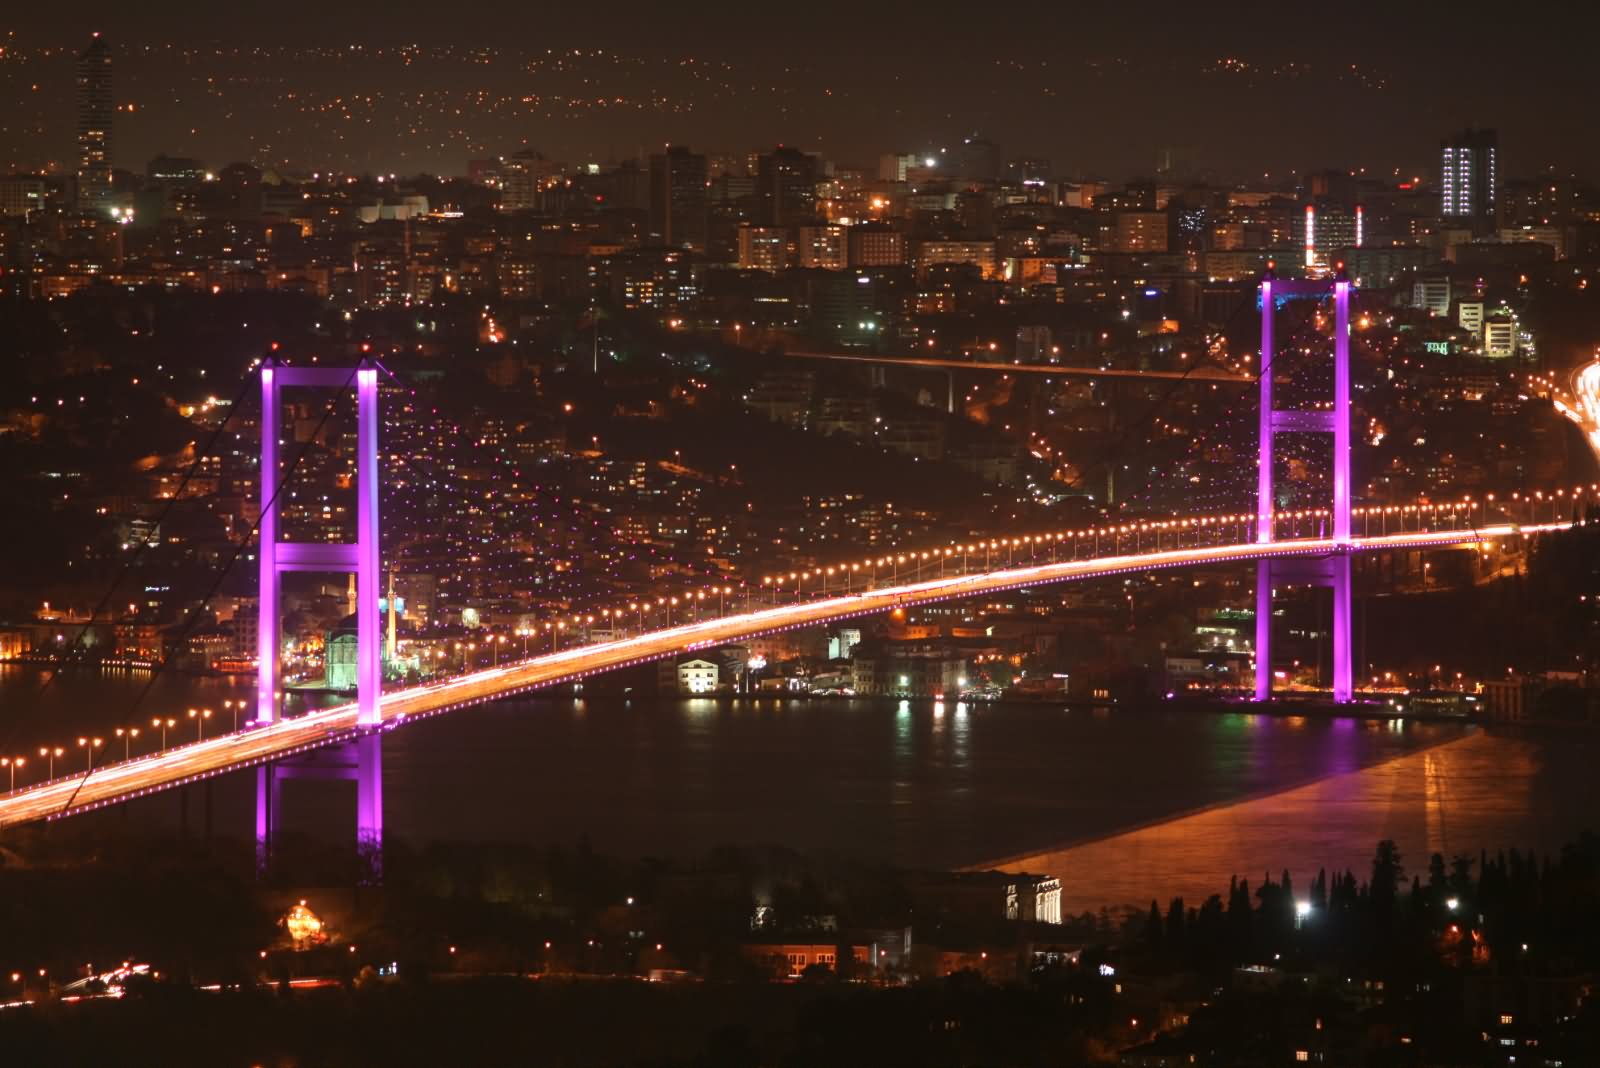 Incredible Night Picture Of The Bosphorus Bridge